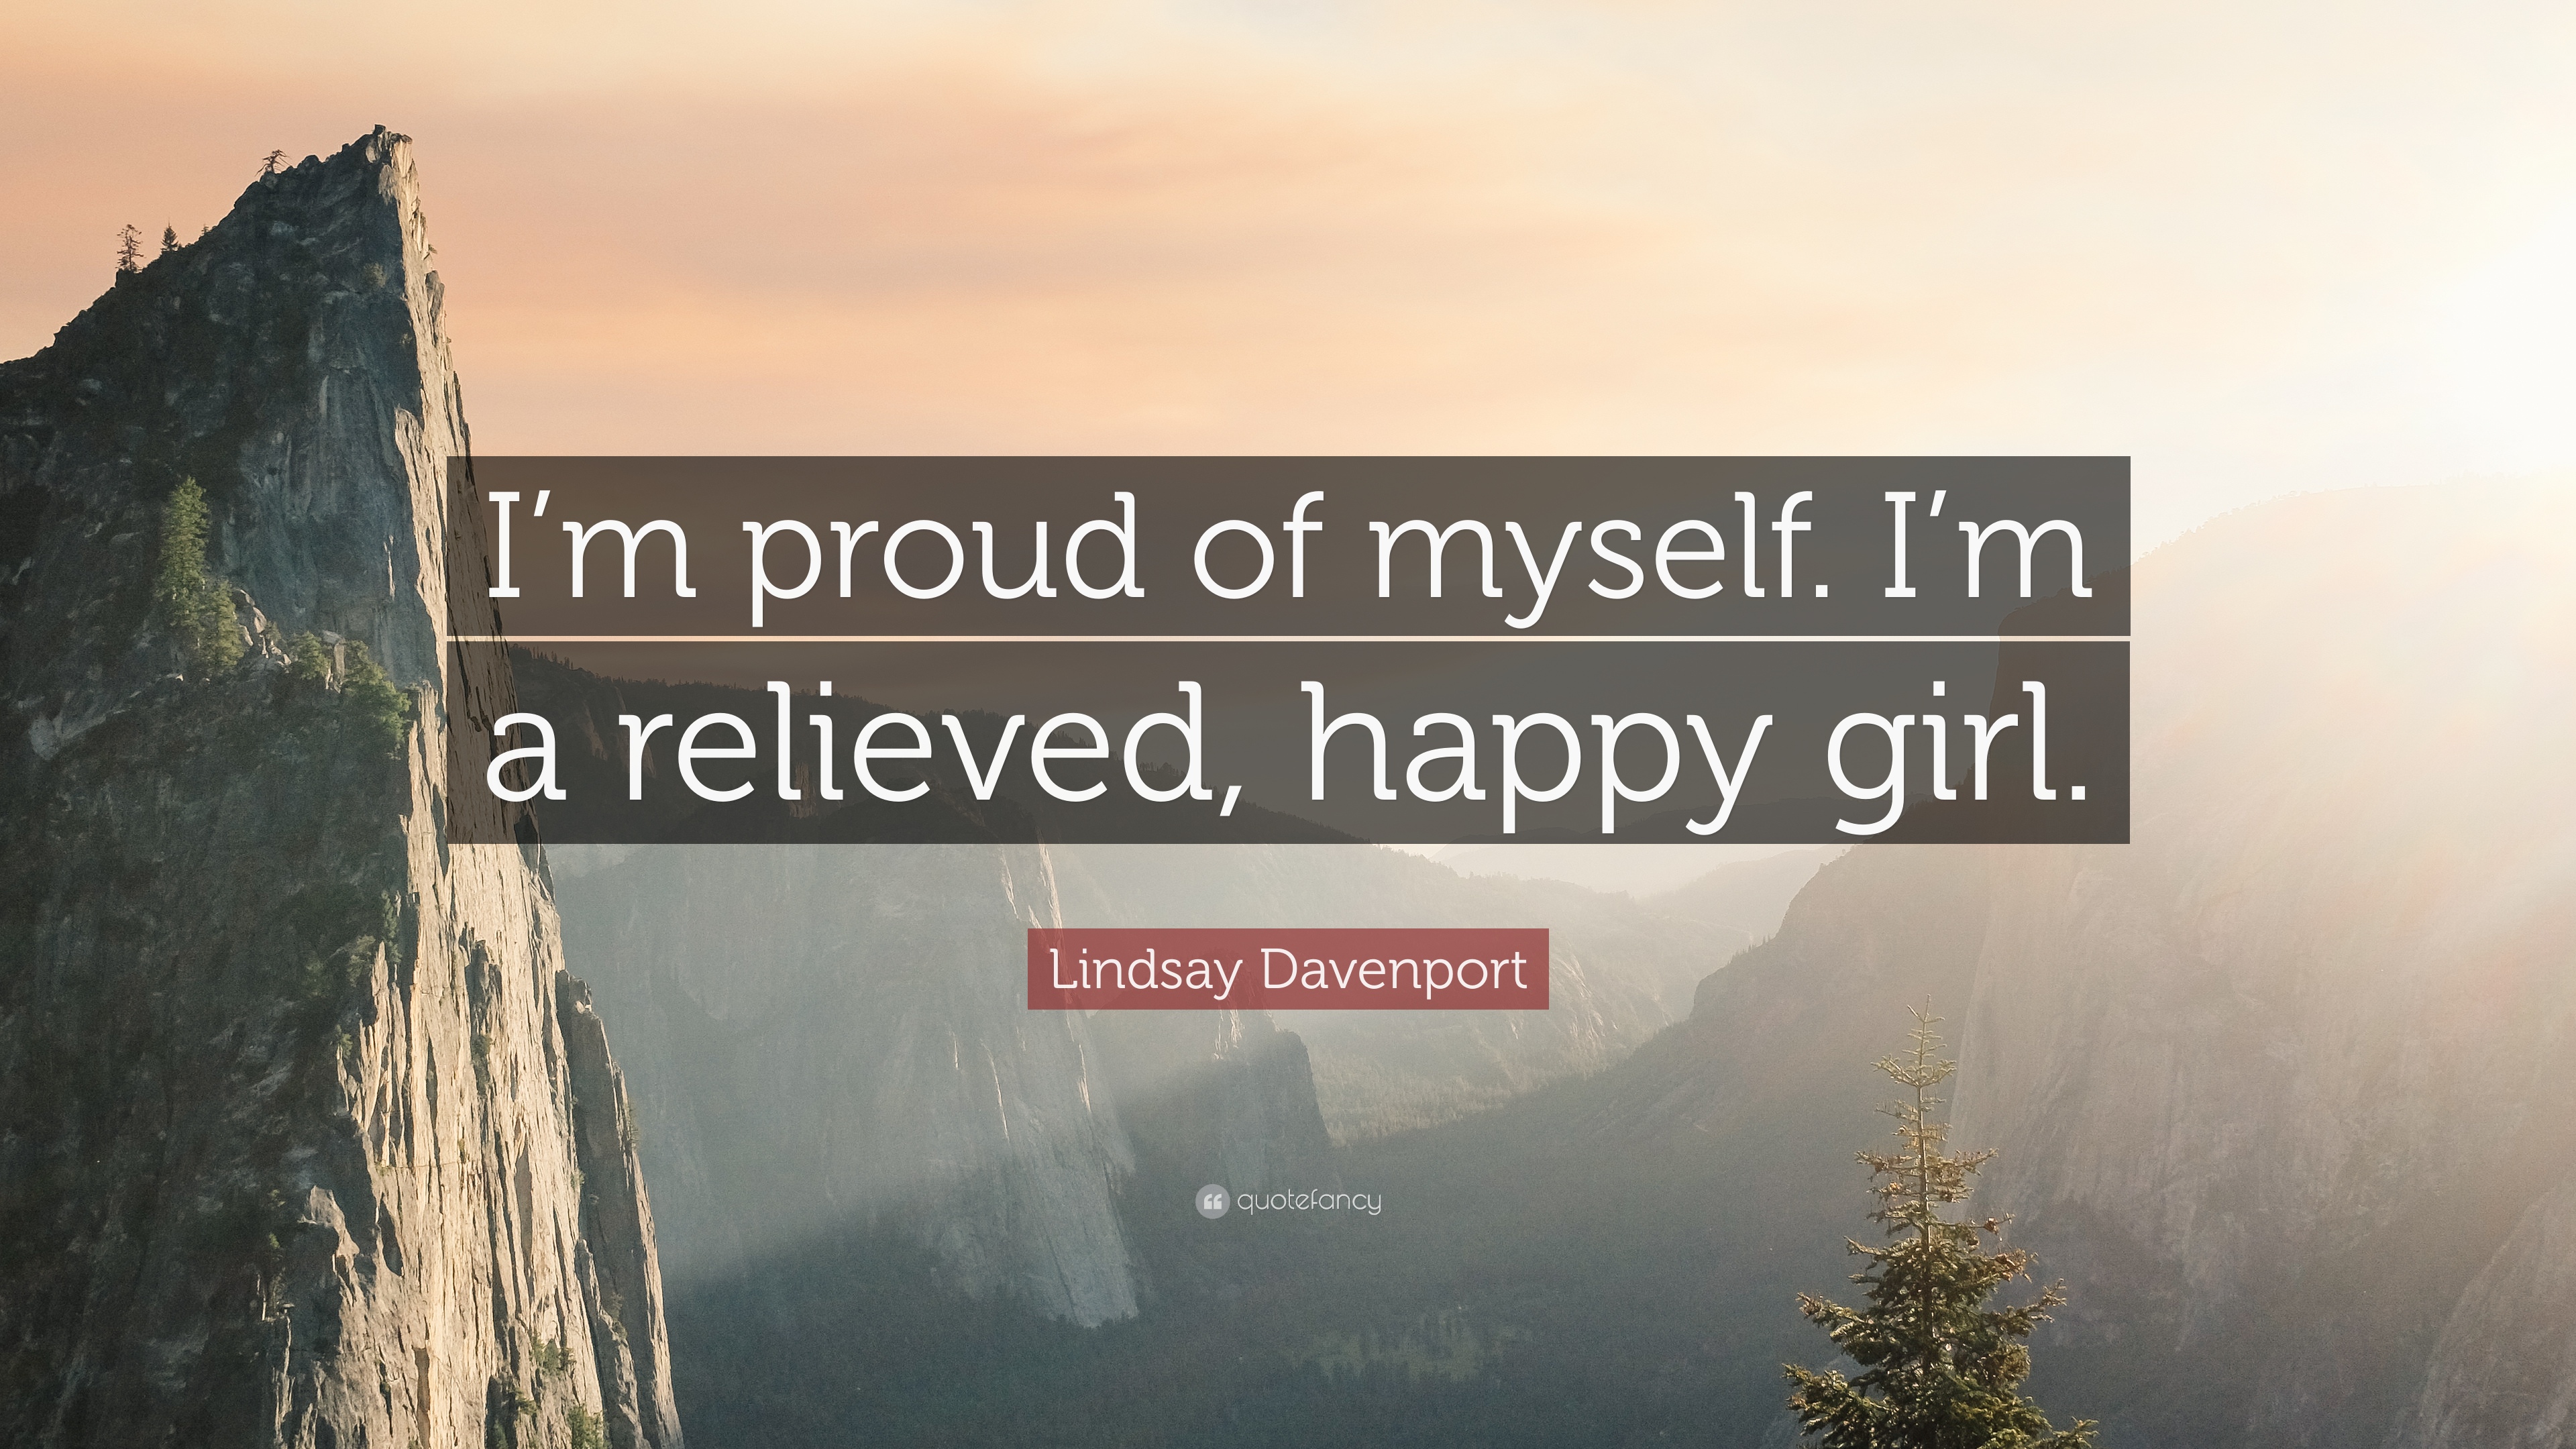 Lindsay Davenport Quote: “I'm proud of myself. I'm a